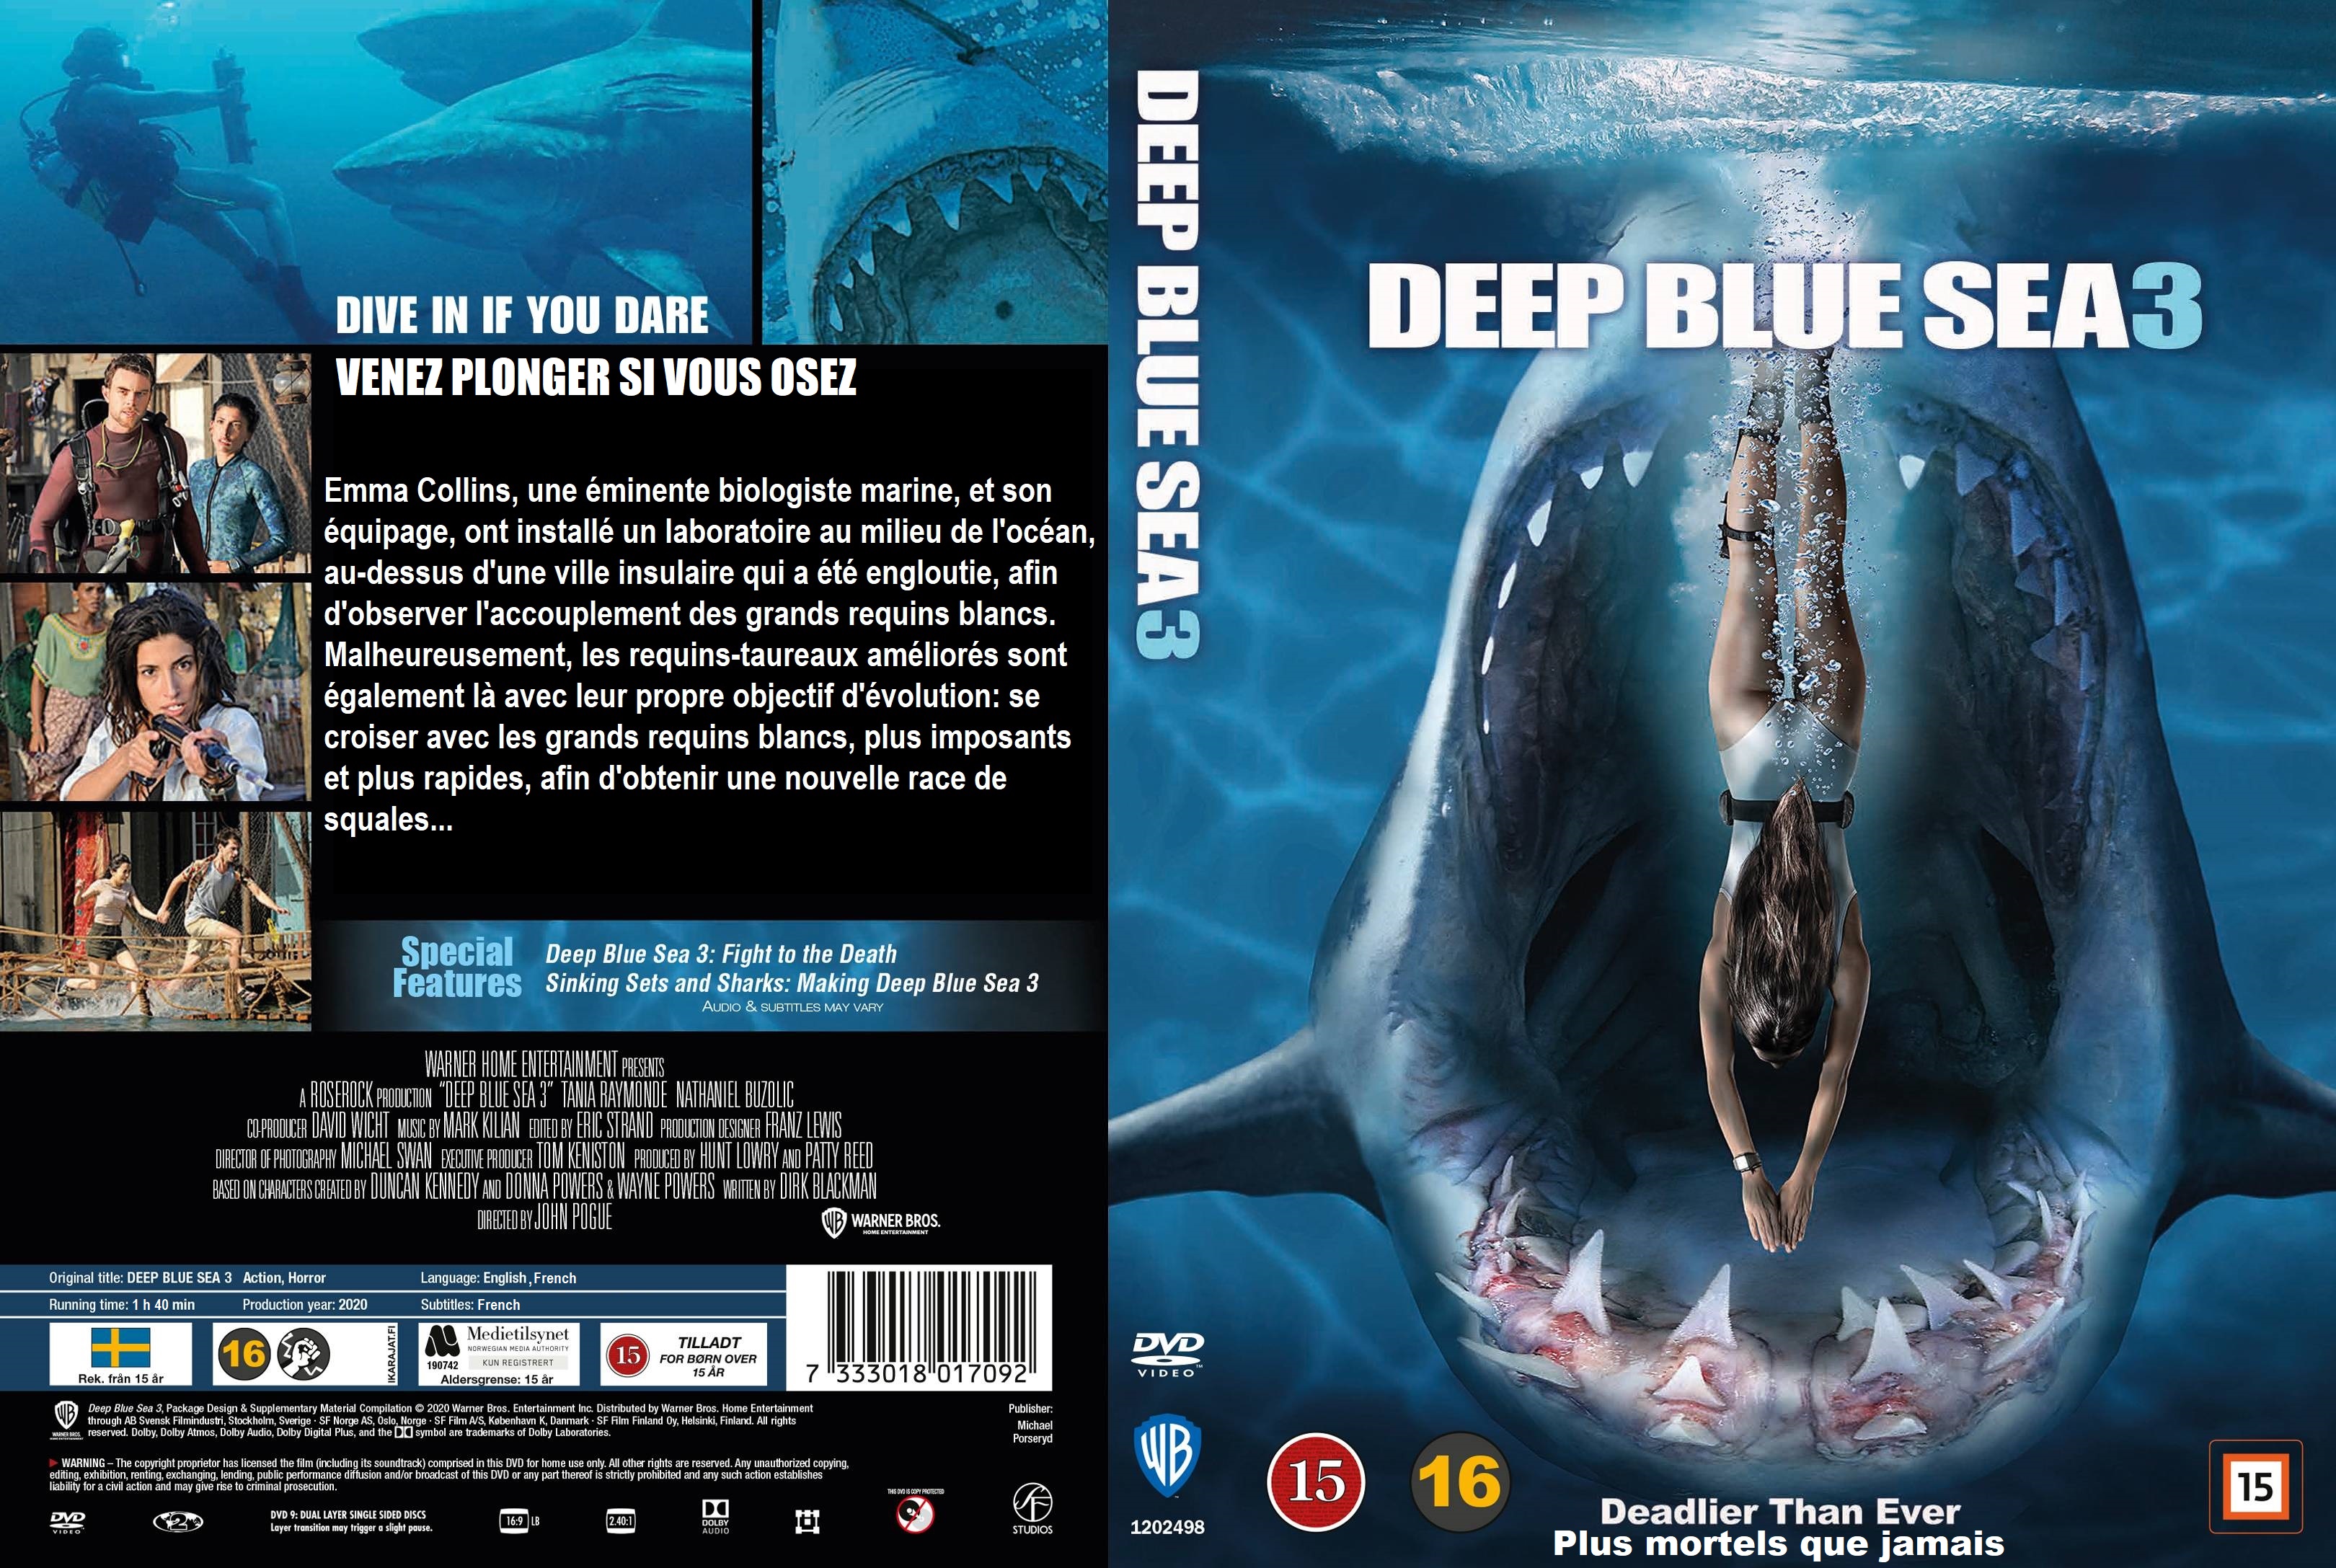 Jaquette DVD Deep Blue Sea 3 custom